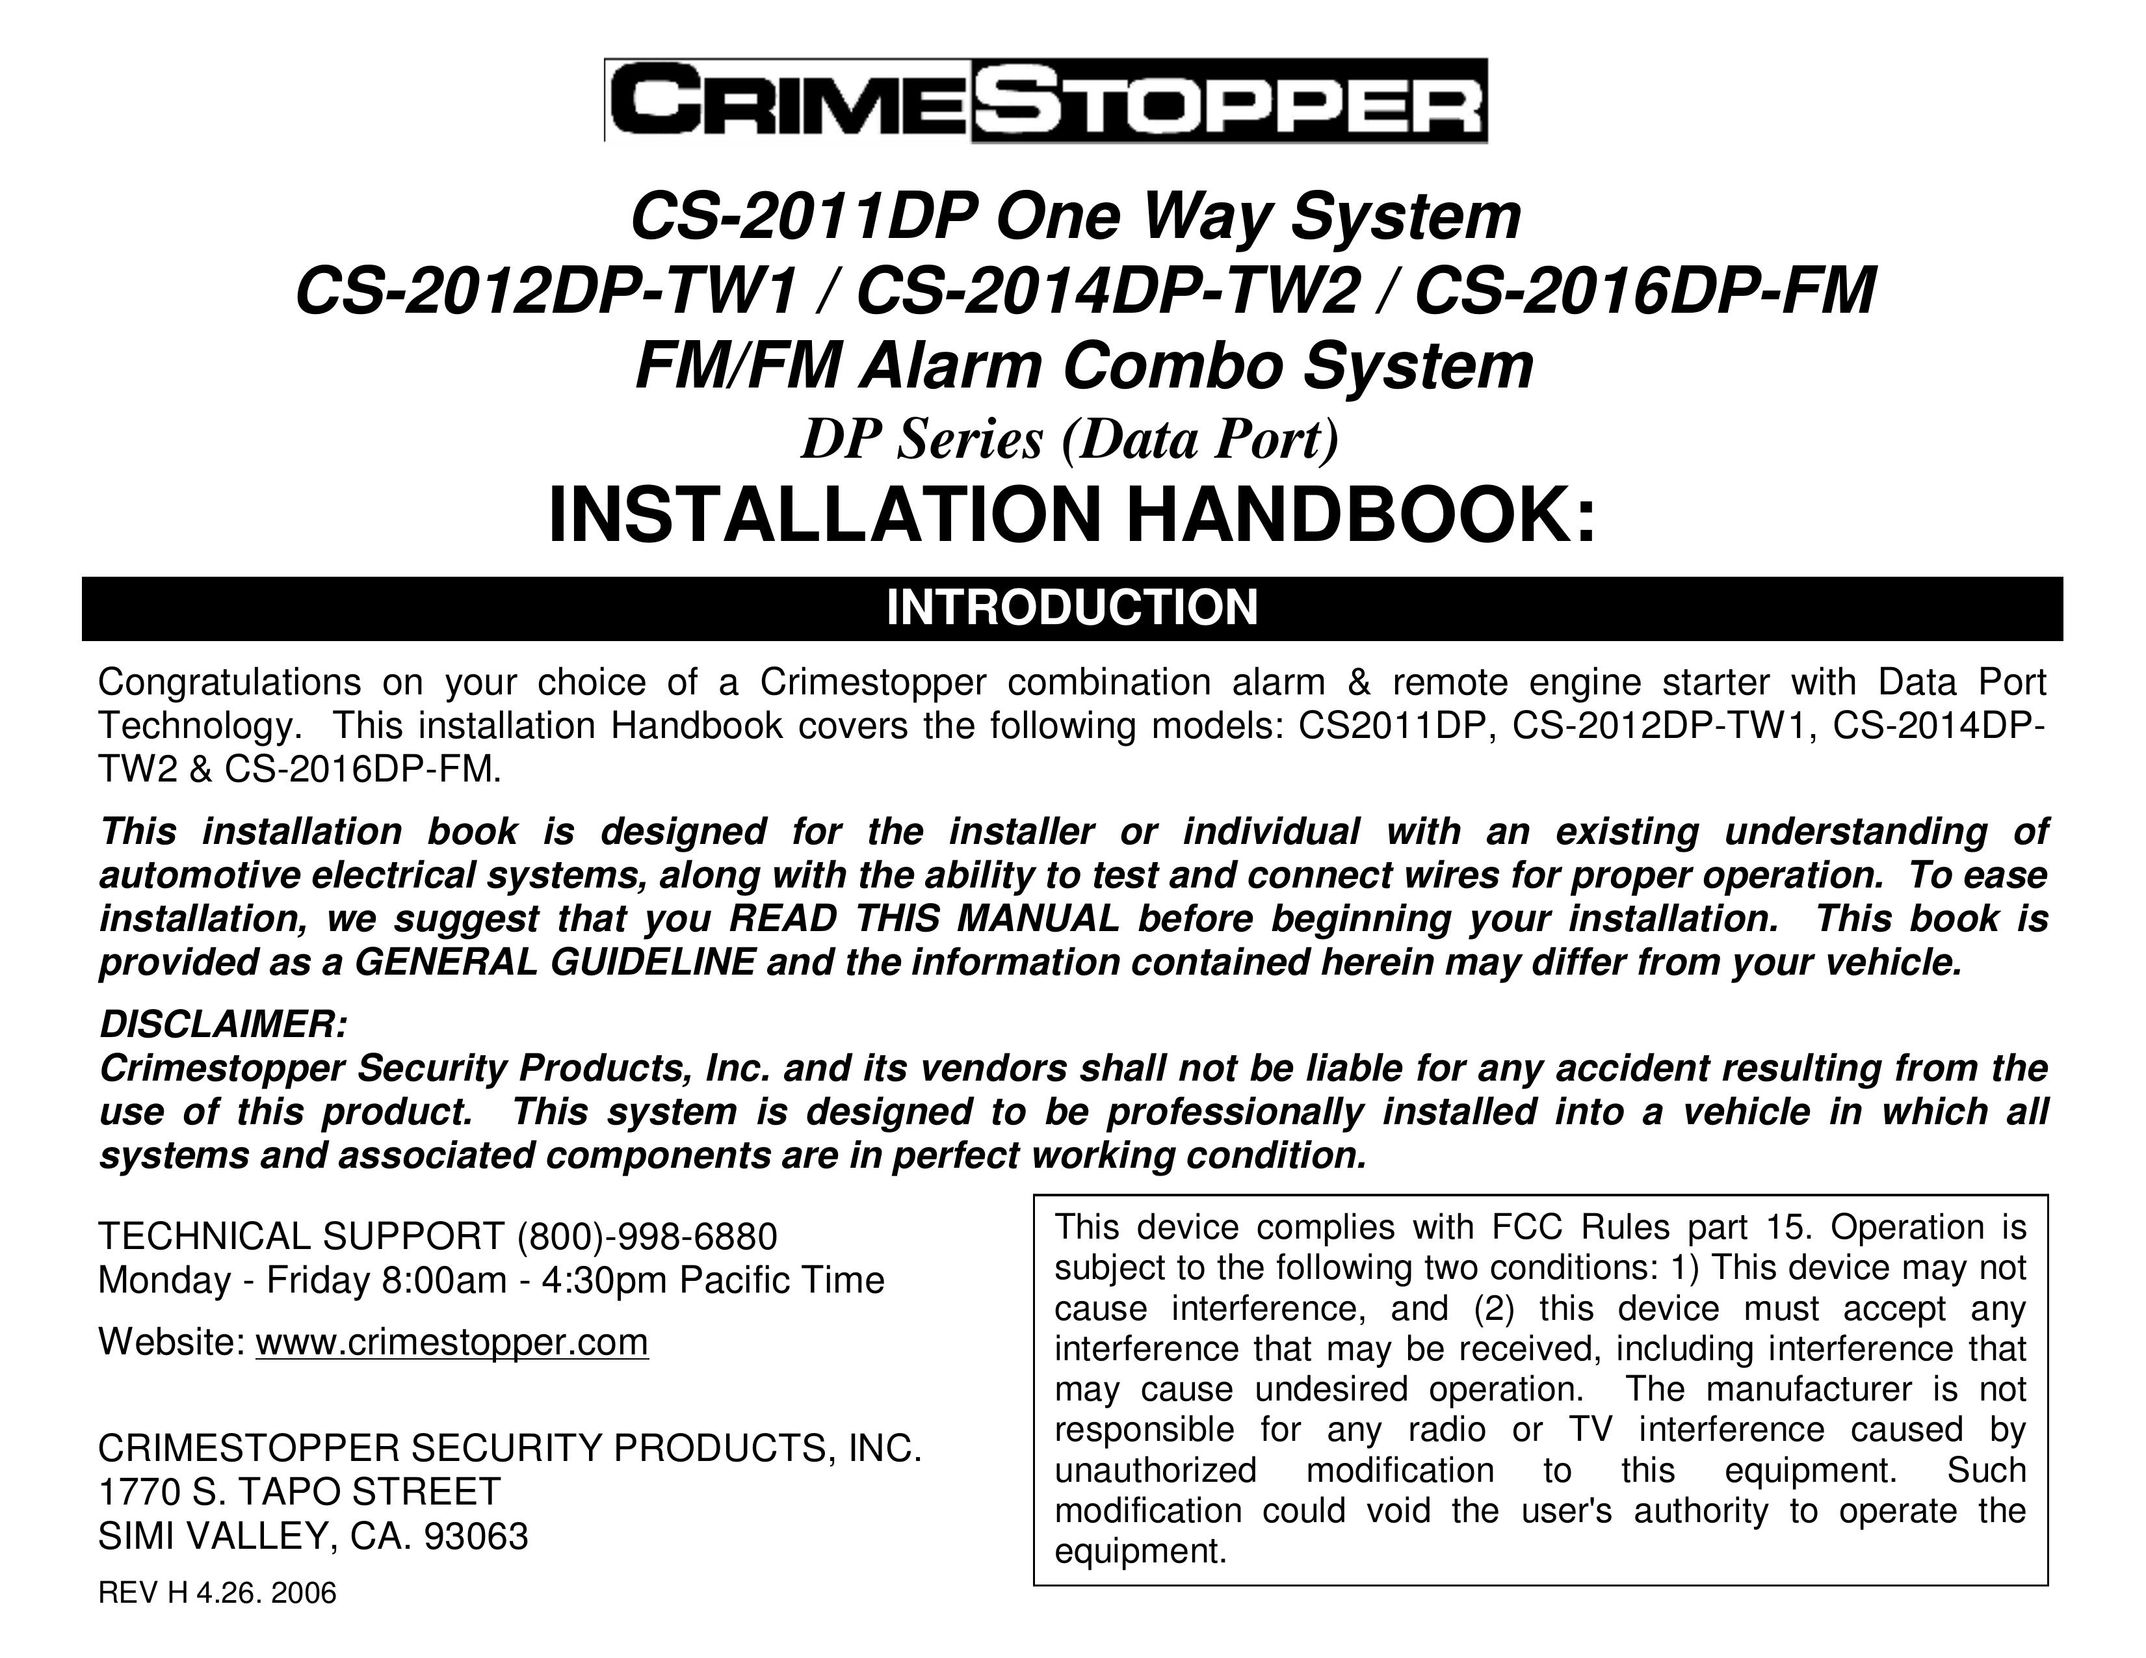 Crimestopper Security Products CS2016 Dpfm Car Video System User Manual